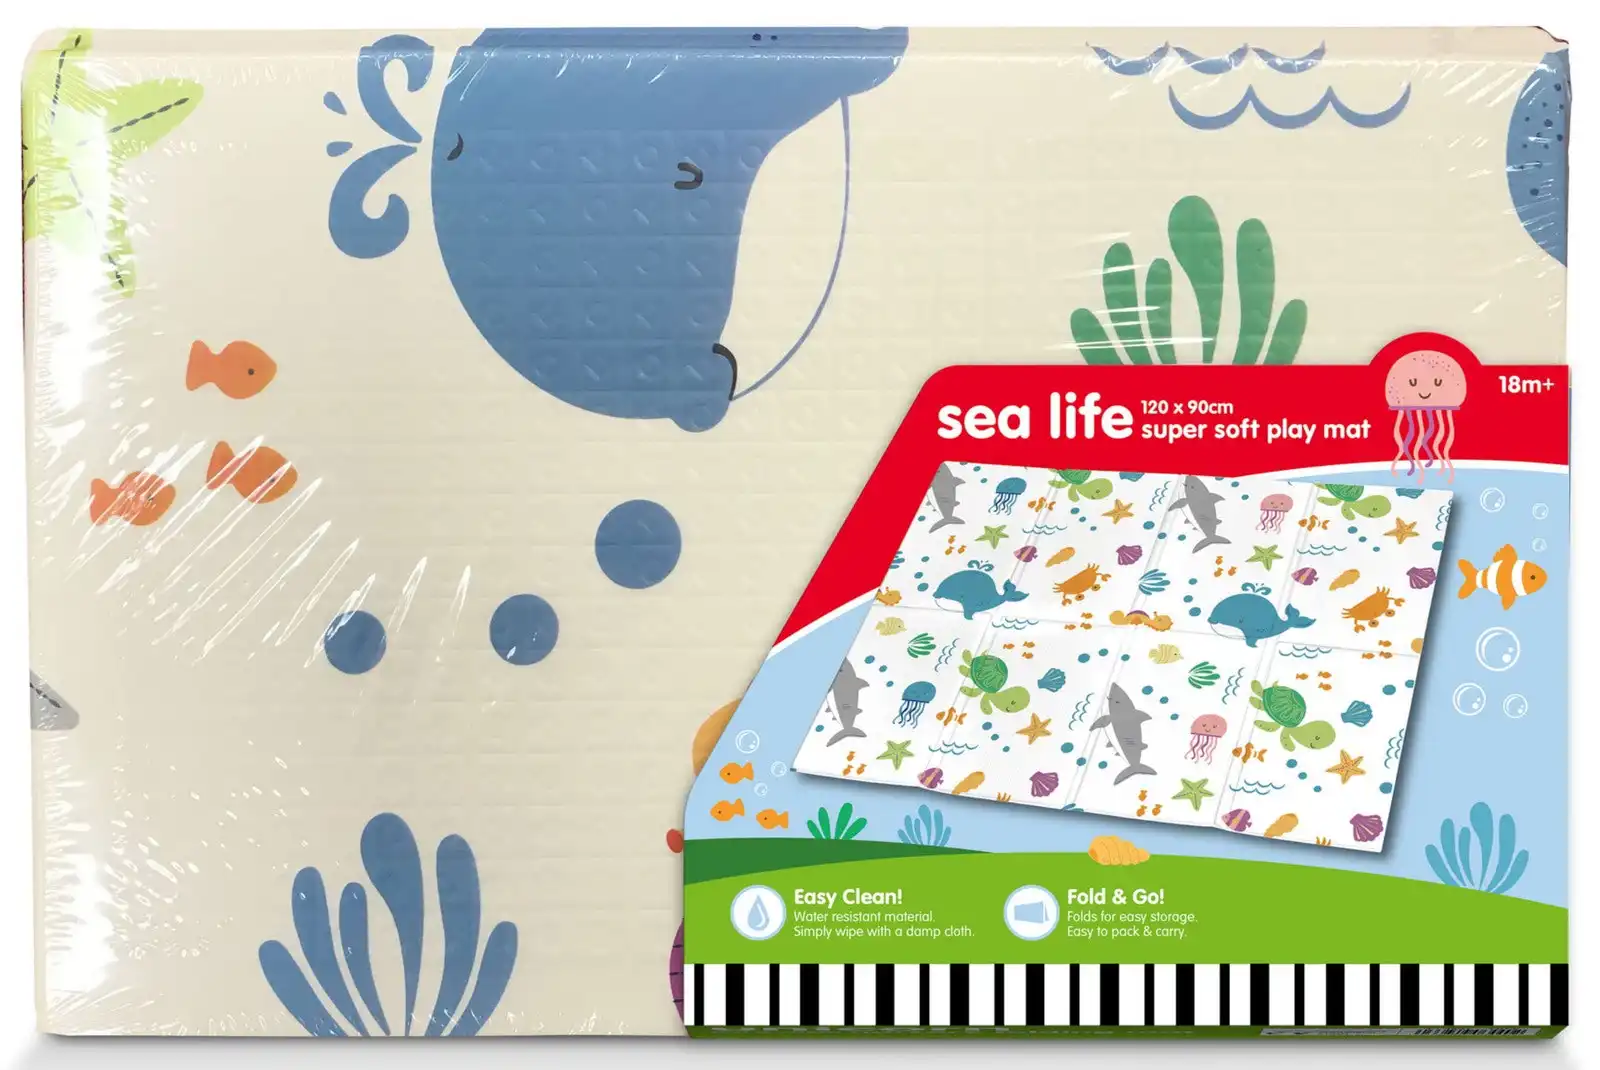 Sea Life Xpe Nursery Folding Mat 1.2m x 90cm